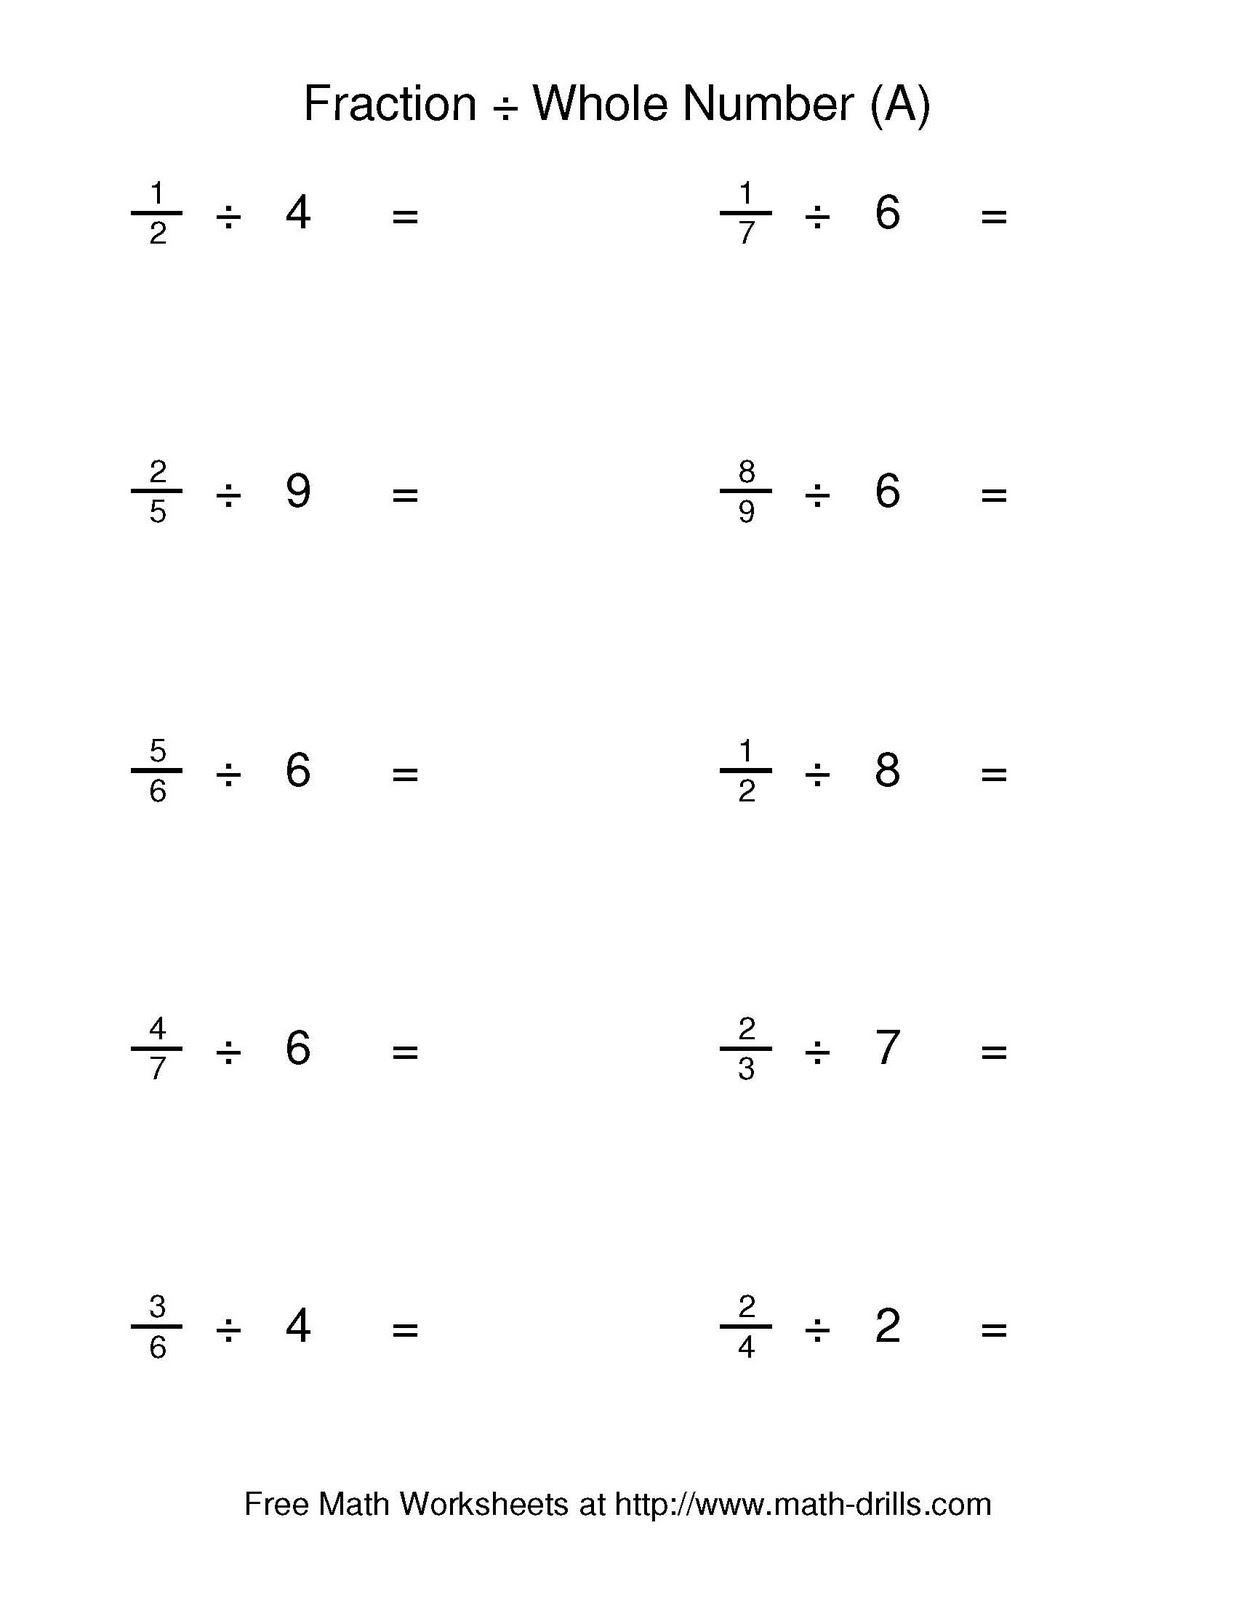 practice-dividing-fractions-worksheet